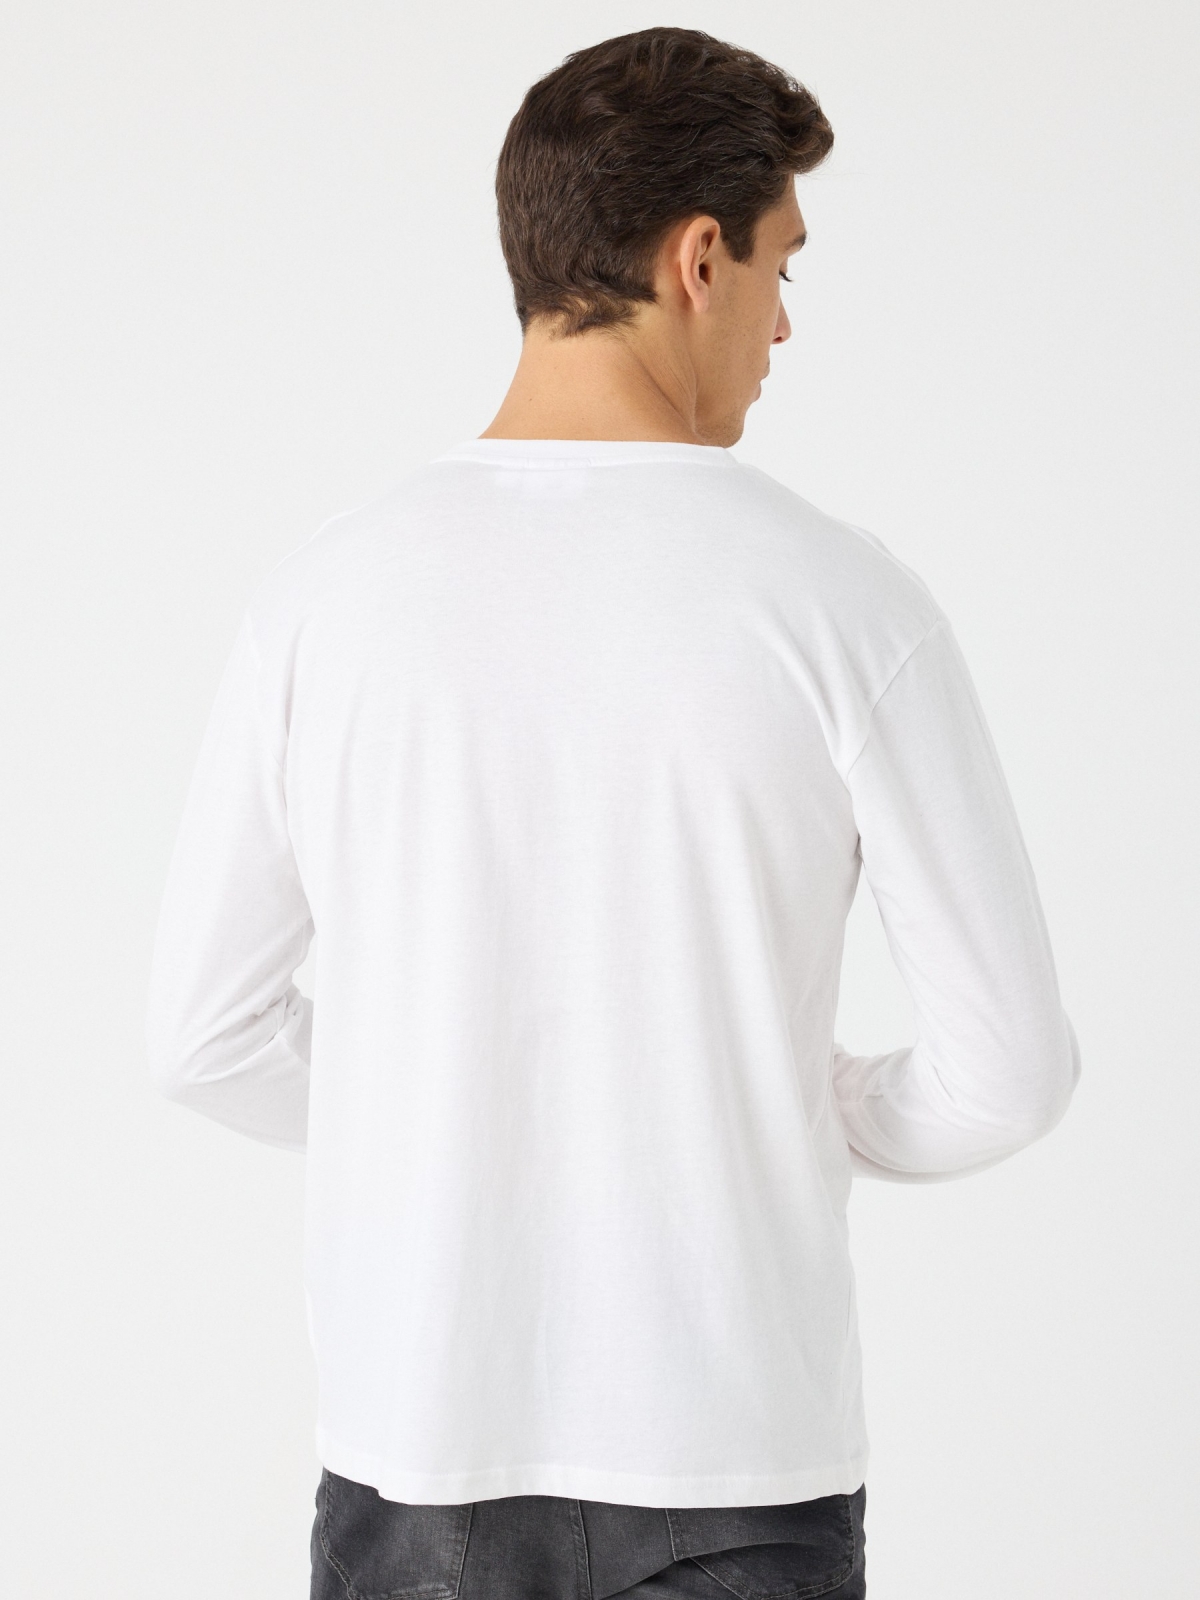 T-shirt manga longa Dragon Ball branco vista meia traseira